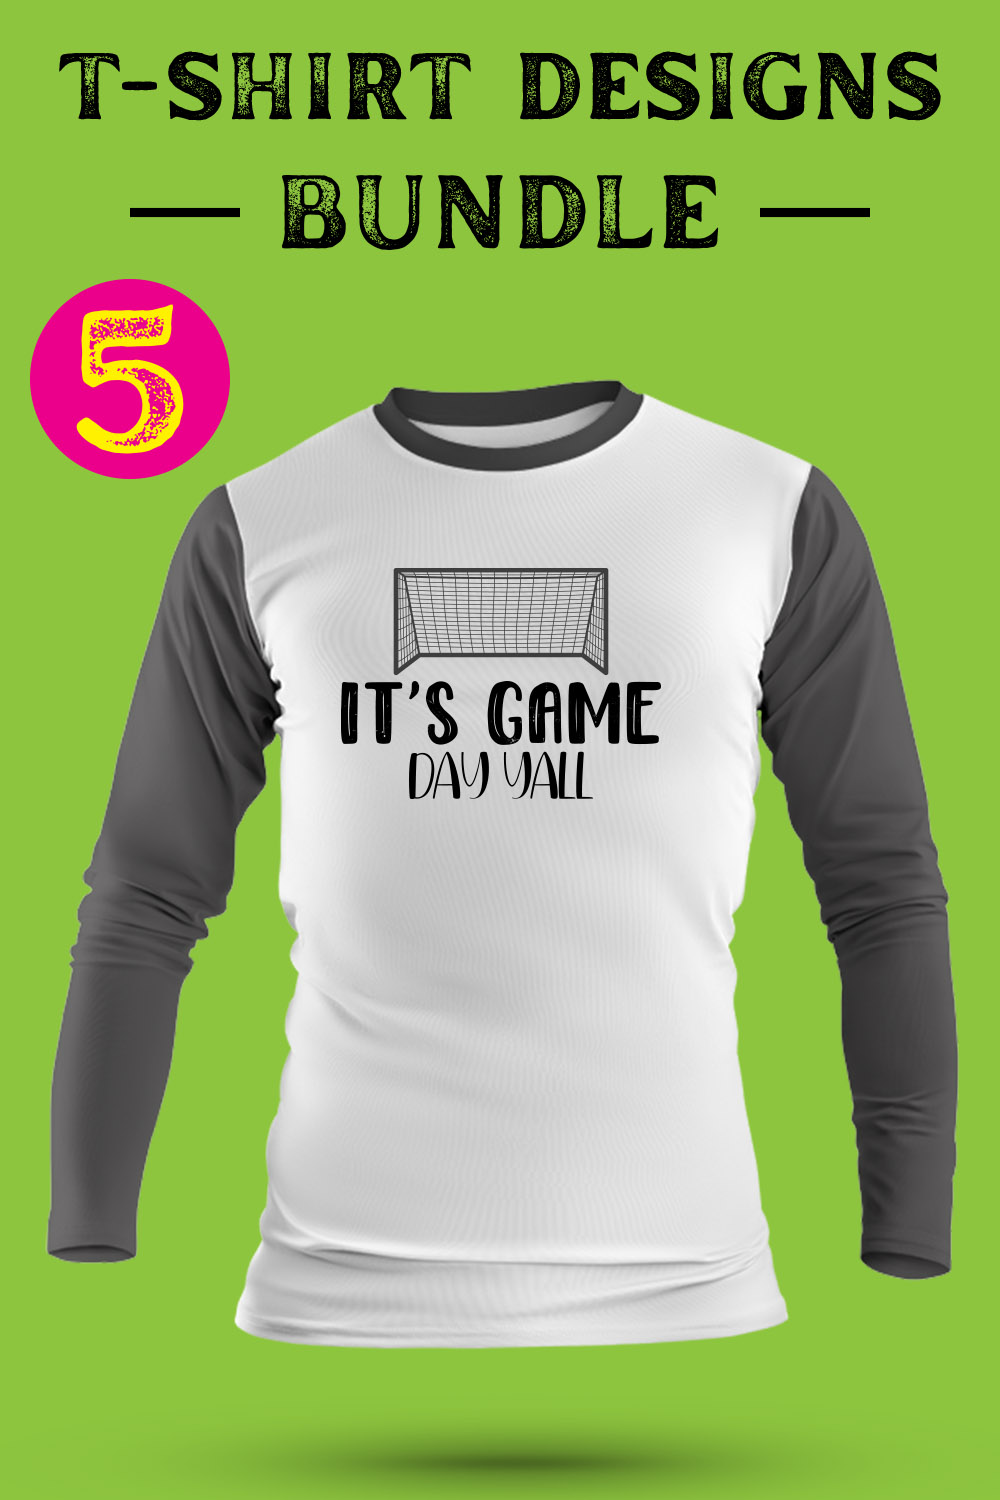 American Football Day T Shirt Designs Bundle voli-12 pinterest preview image.